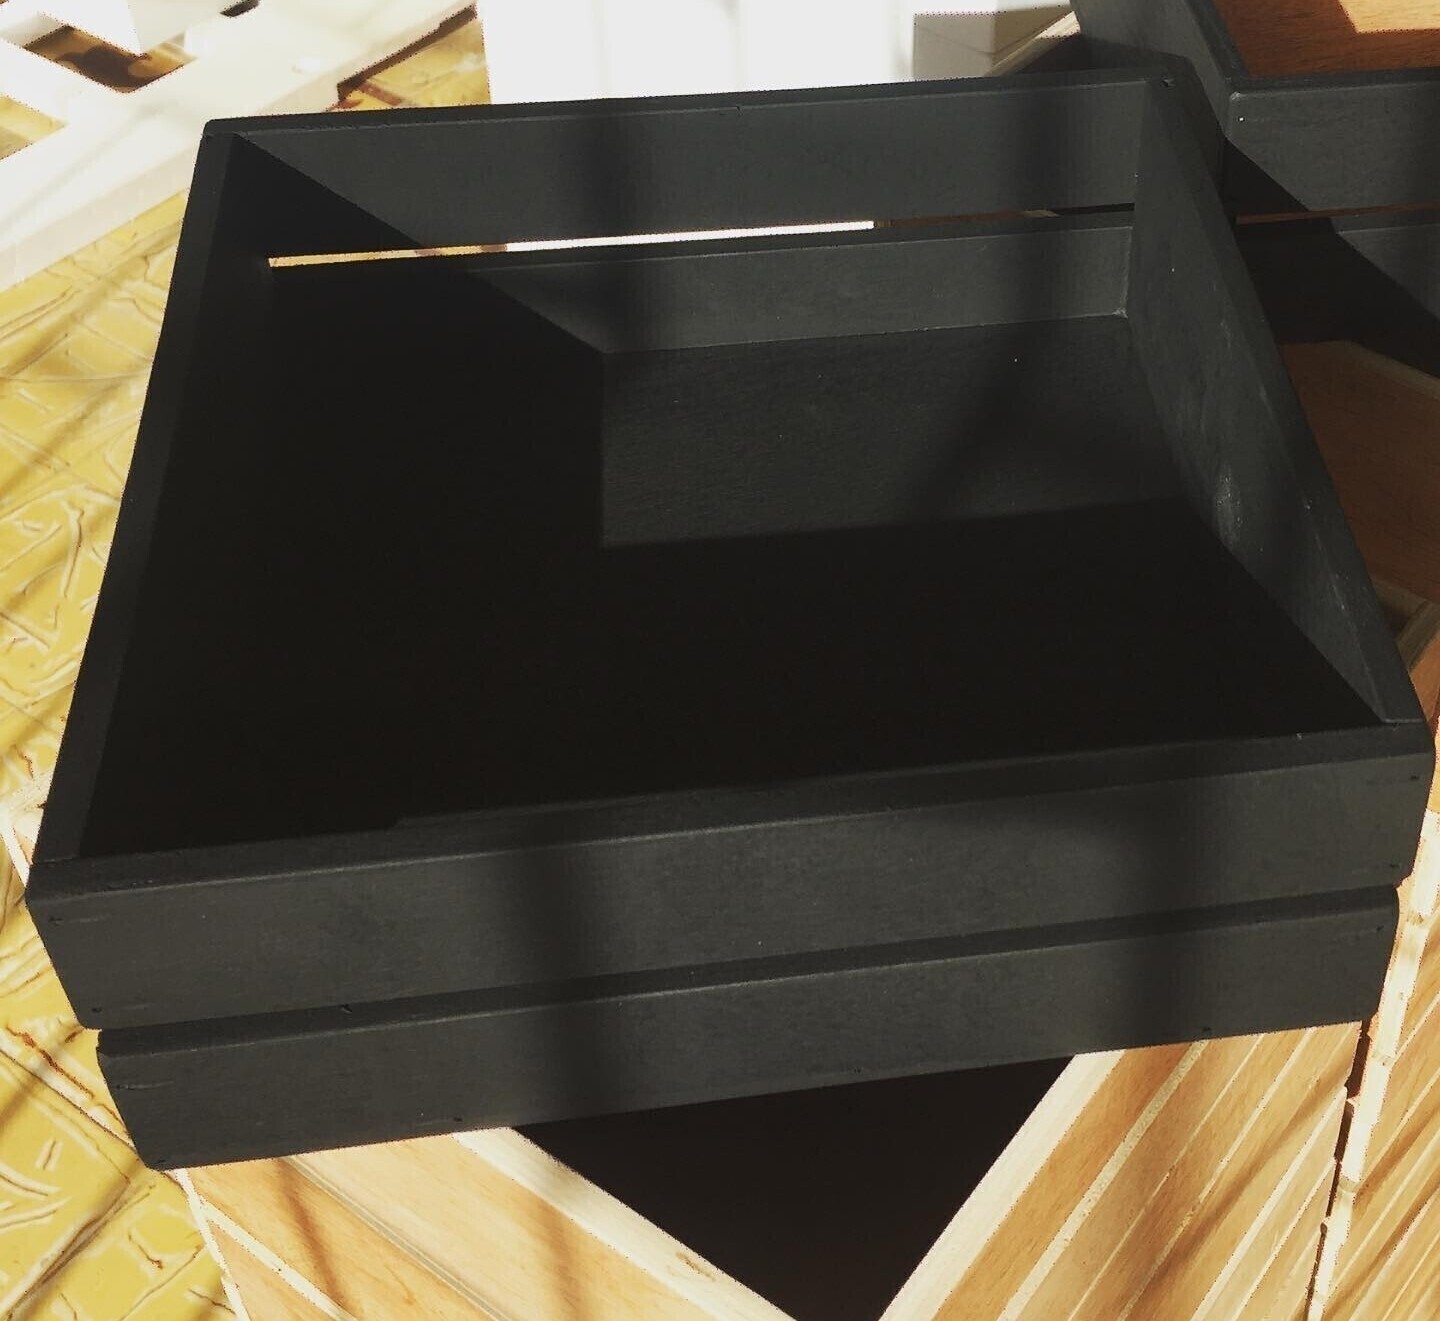 12.5x12.5x3.5 inch black crate gift box